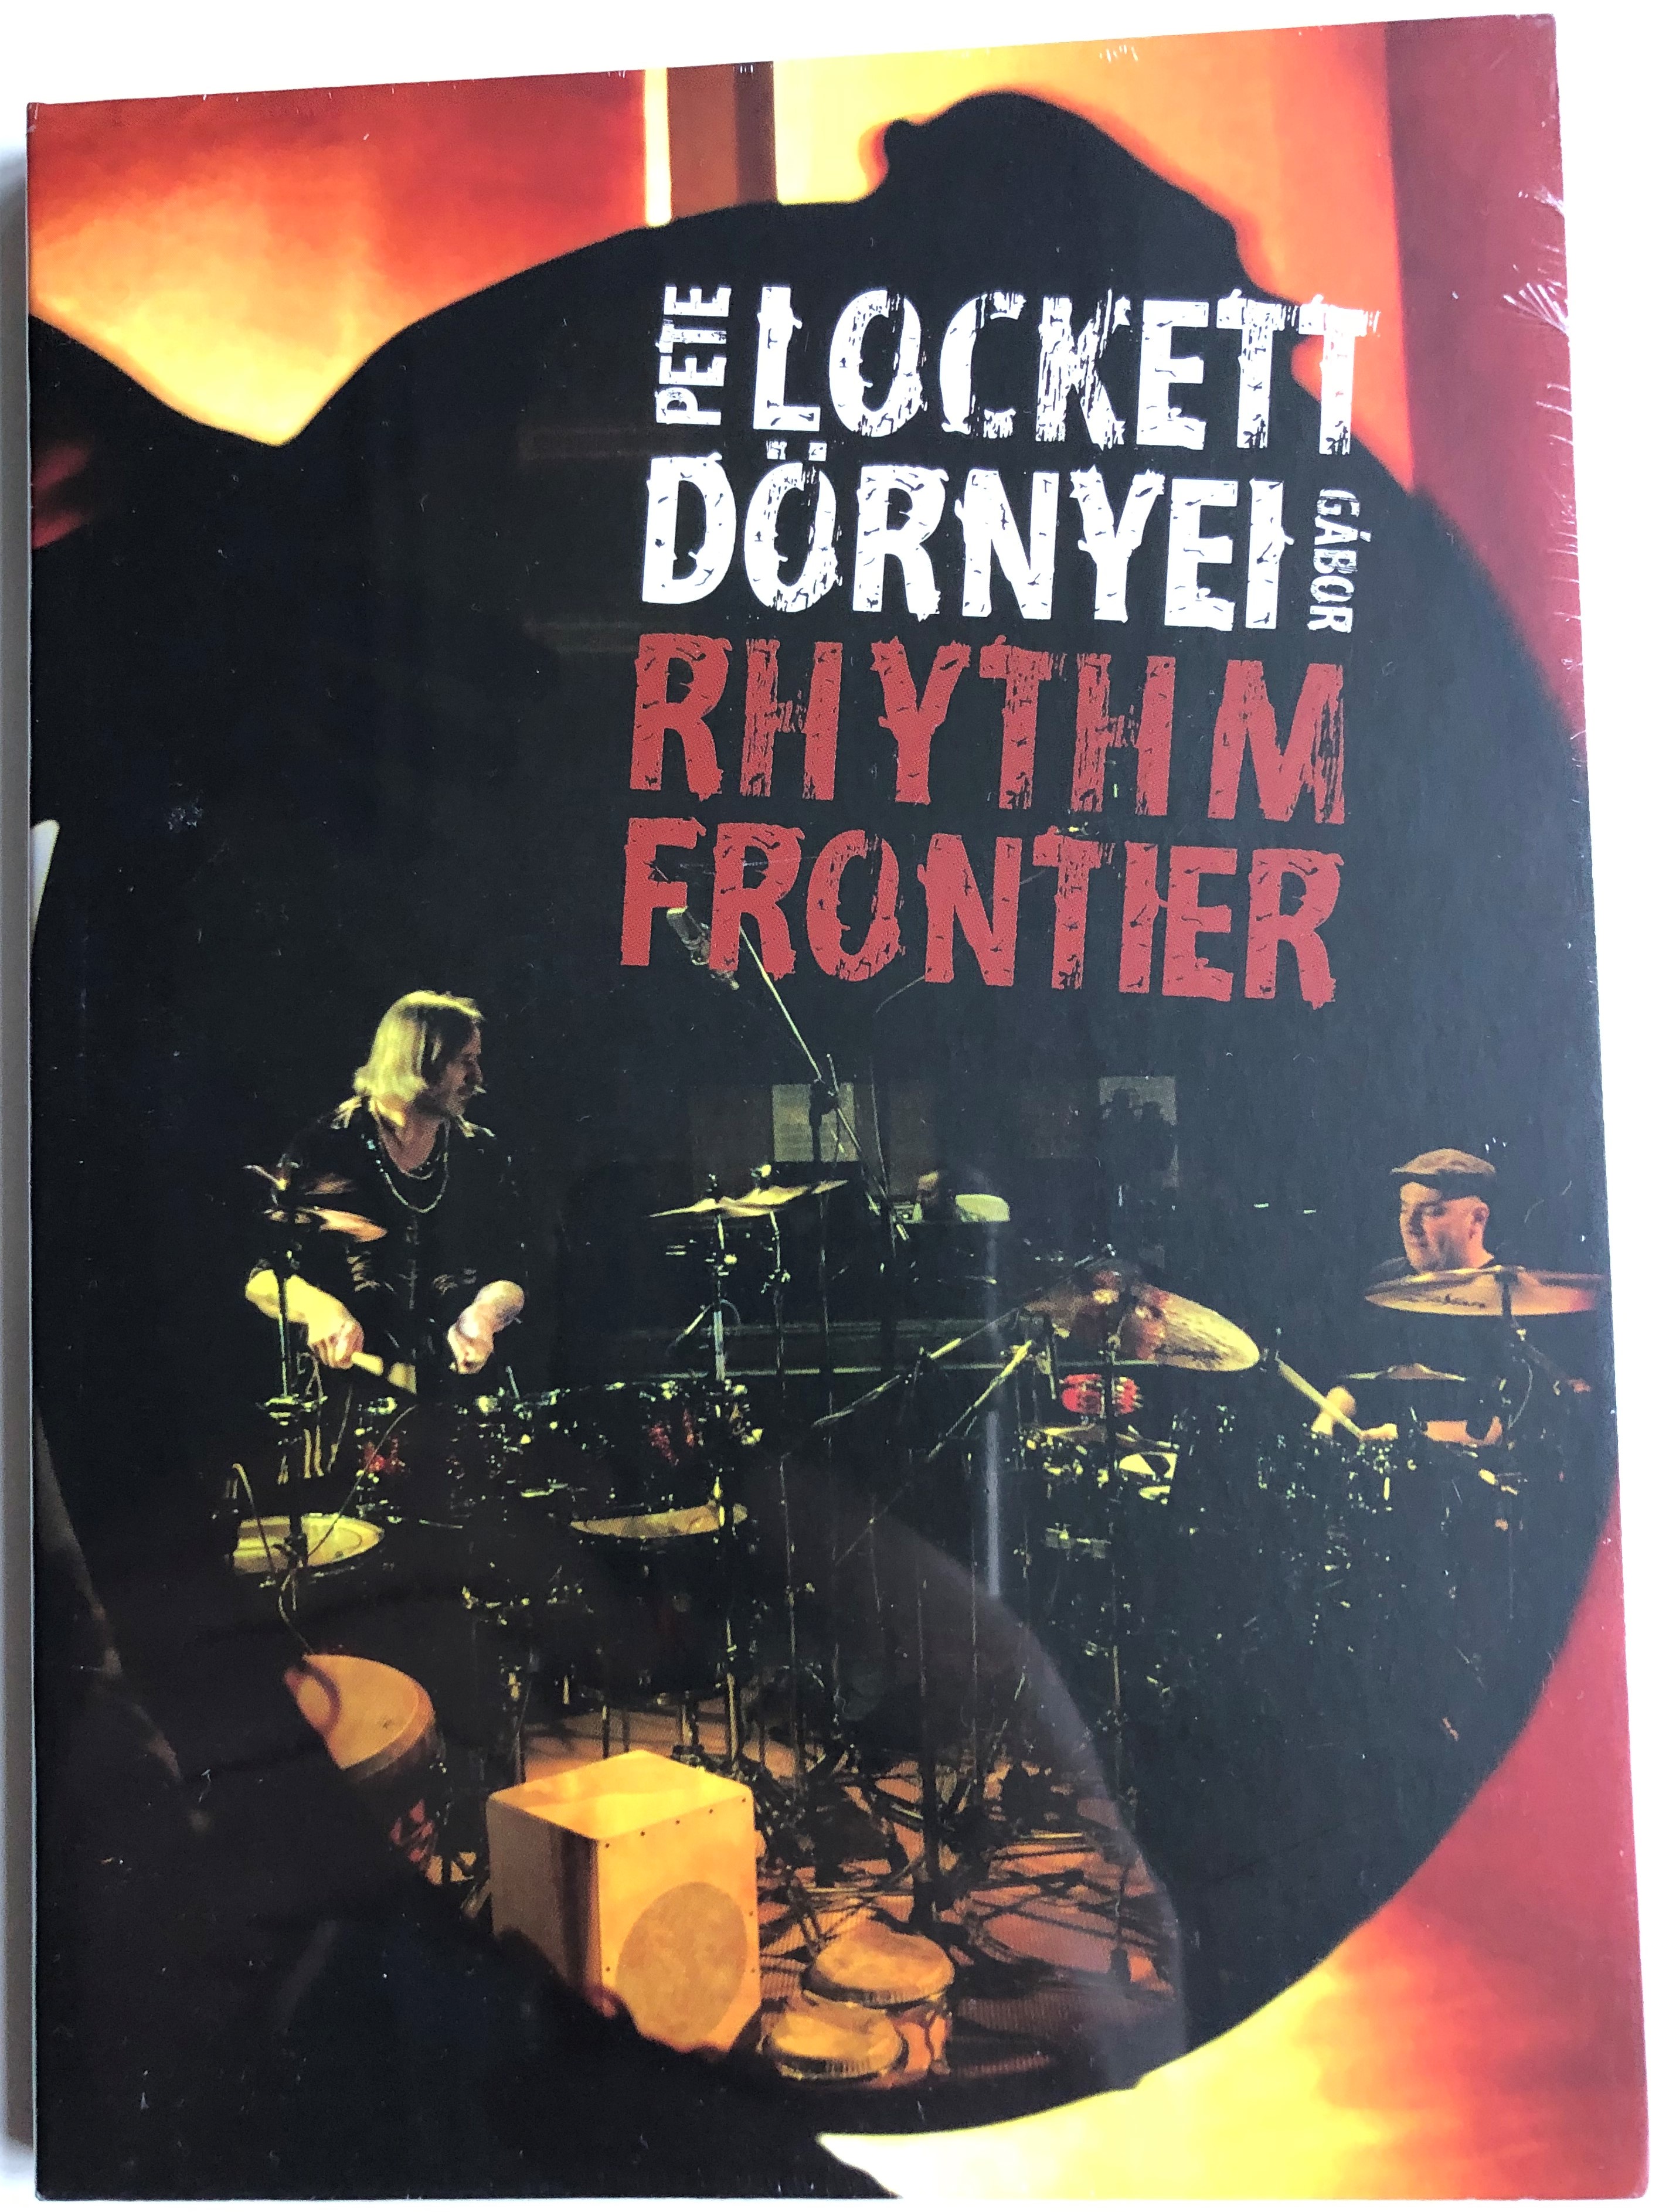 Pete Lockett - Gábor Dörnyei - Rhythm Frontier DVD 2014 / Hunnia Records &  Film Production / Primal / Self Portrait, Prism, Dhatuna, For John B, A  drift in time - bibleinmylanguage